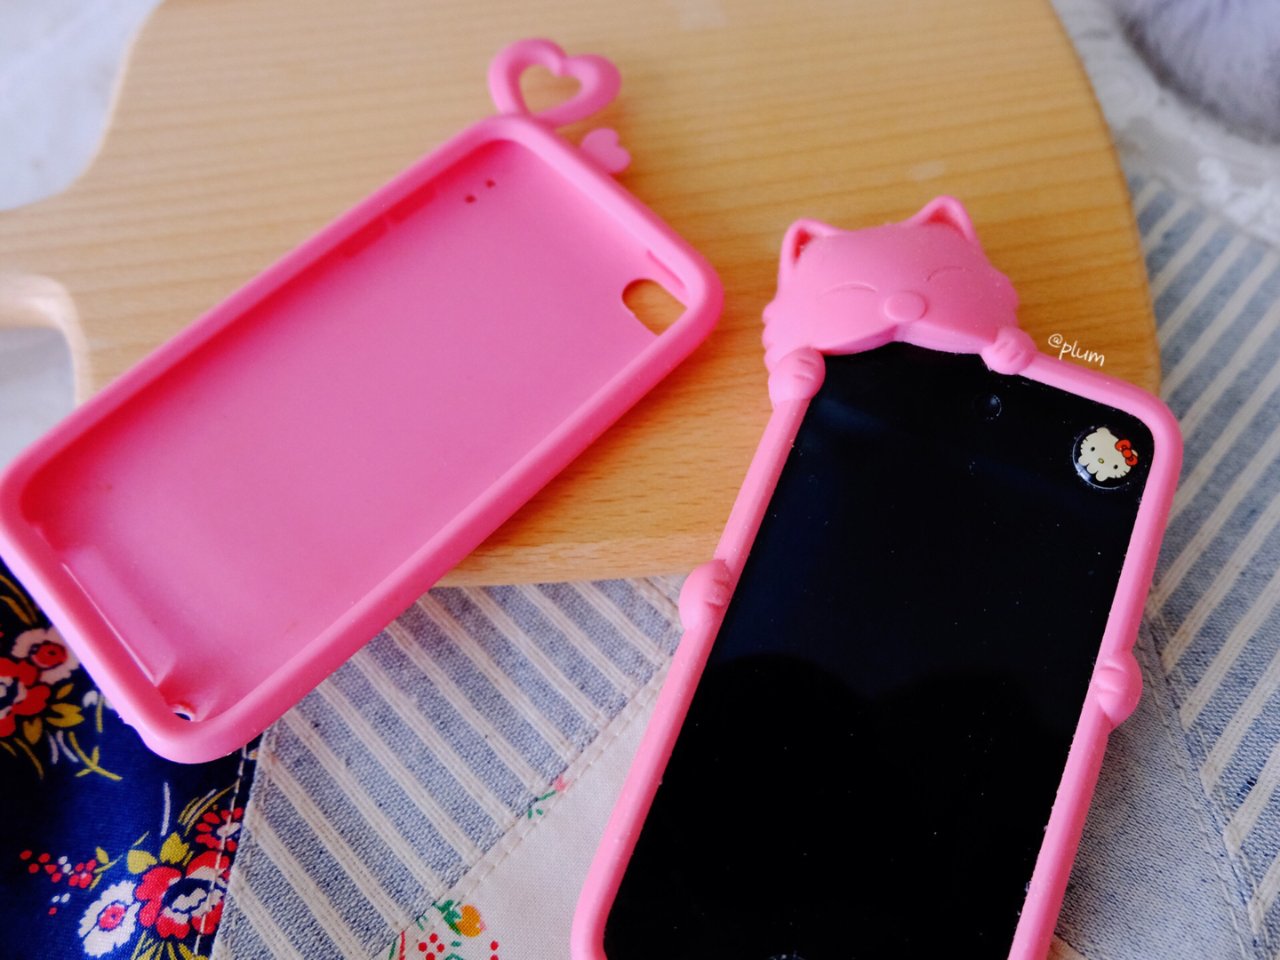 iPod 保护壳 🐱粉色小猫咪和小桃心♥...